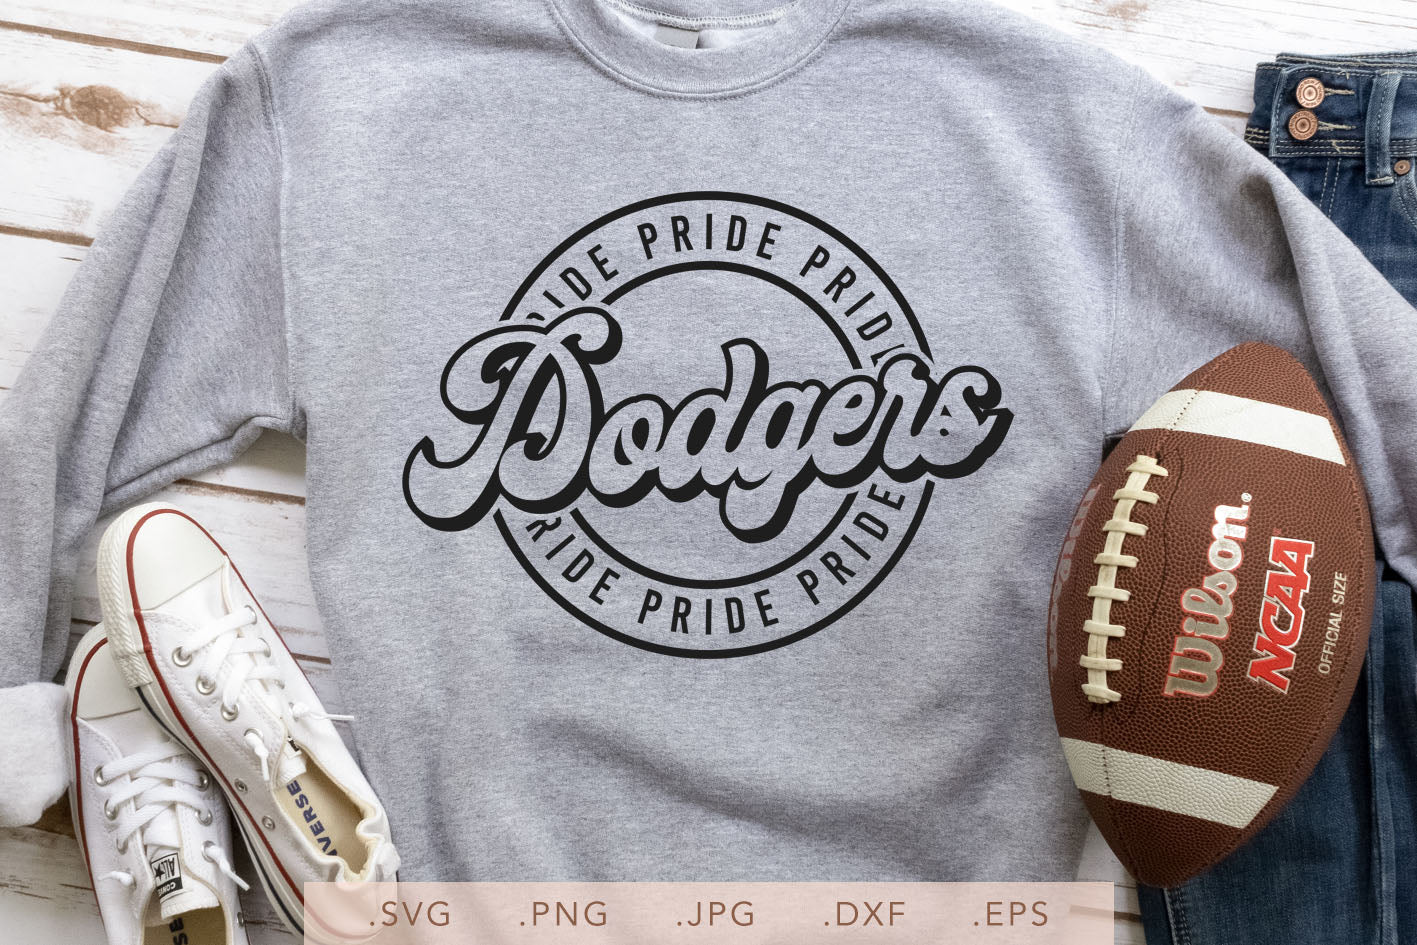 Dodgers Pride Round Vintage SVG DXF JPG PNG EPS, School Team Spirit